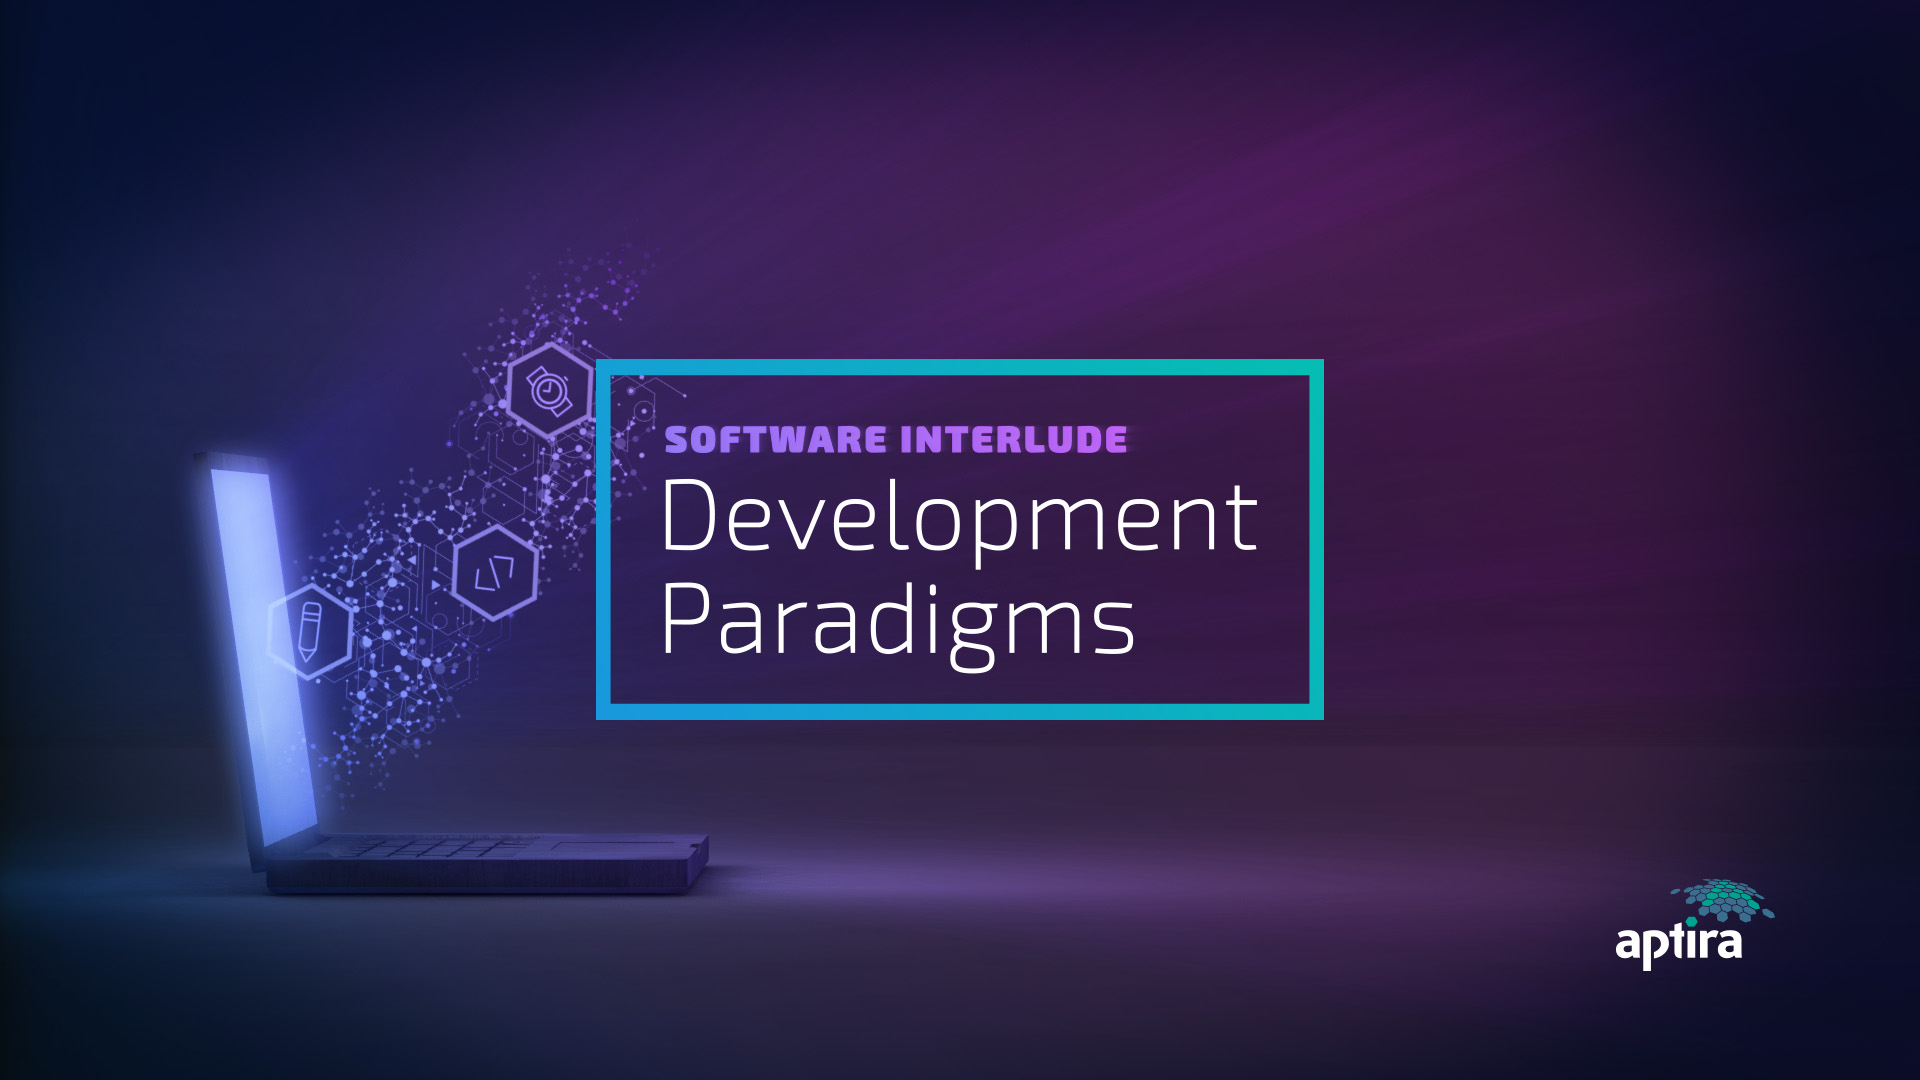 Aptira Software Interlude - Development Paradigms